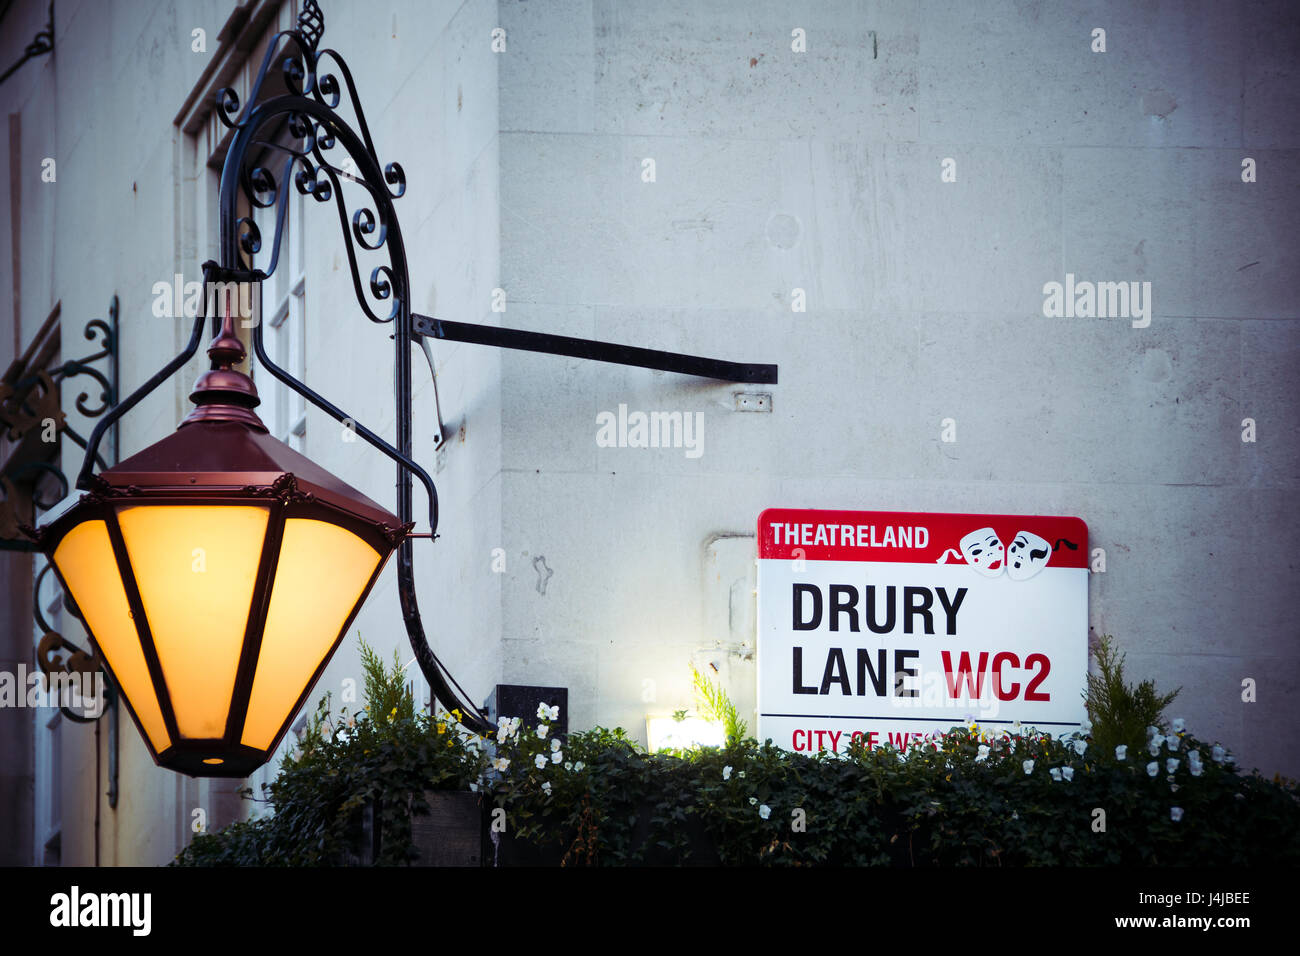 Drury Lane in London theatreland Stock Photo